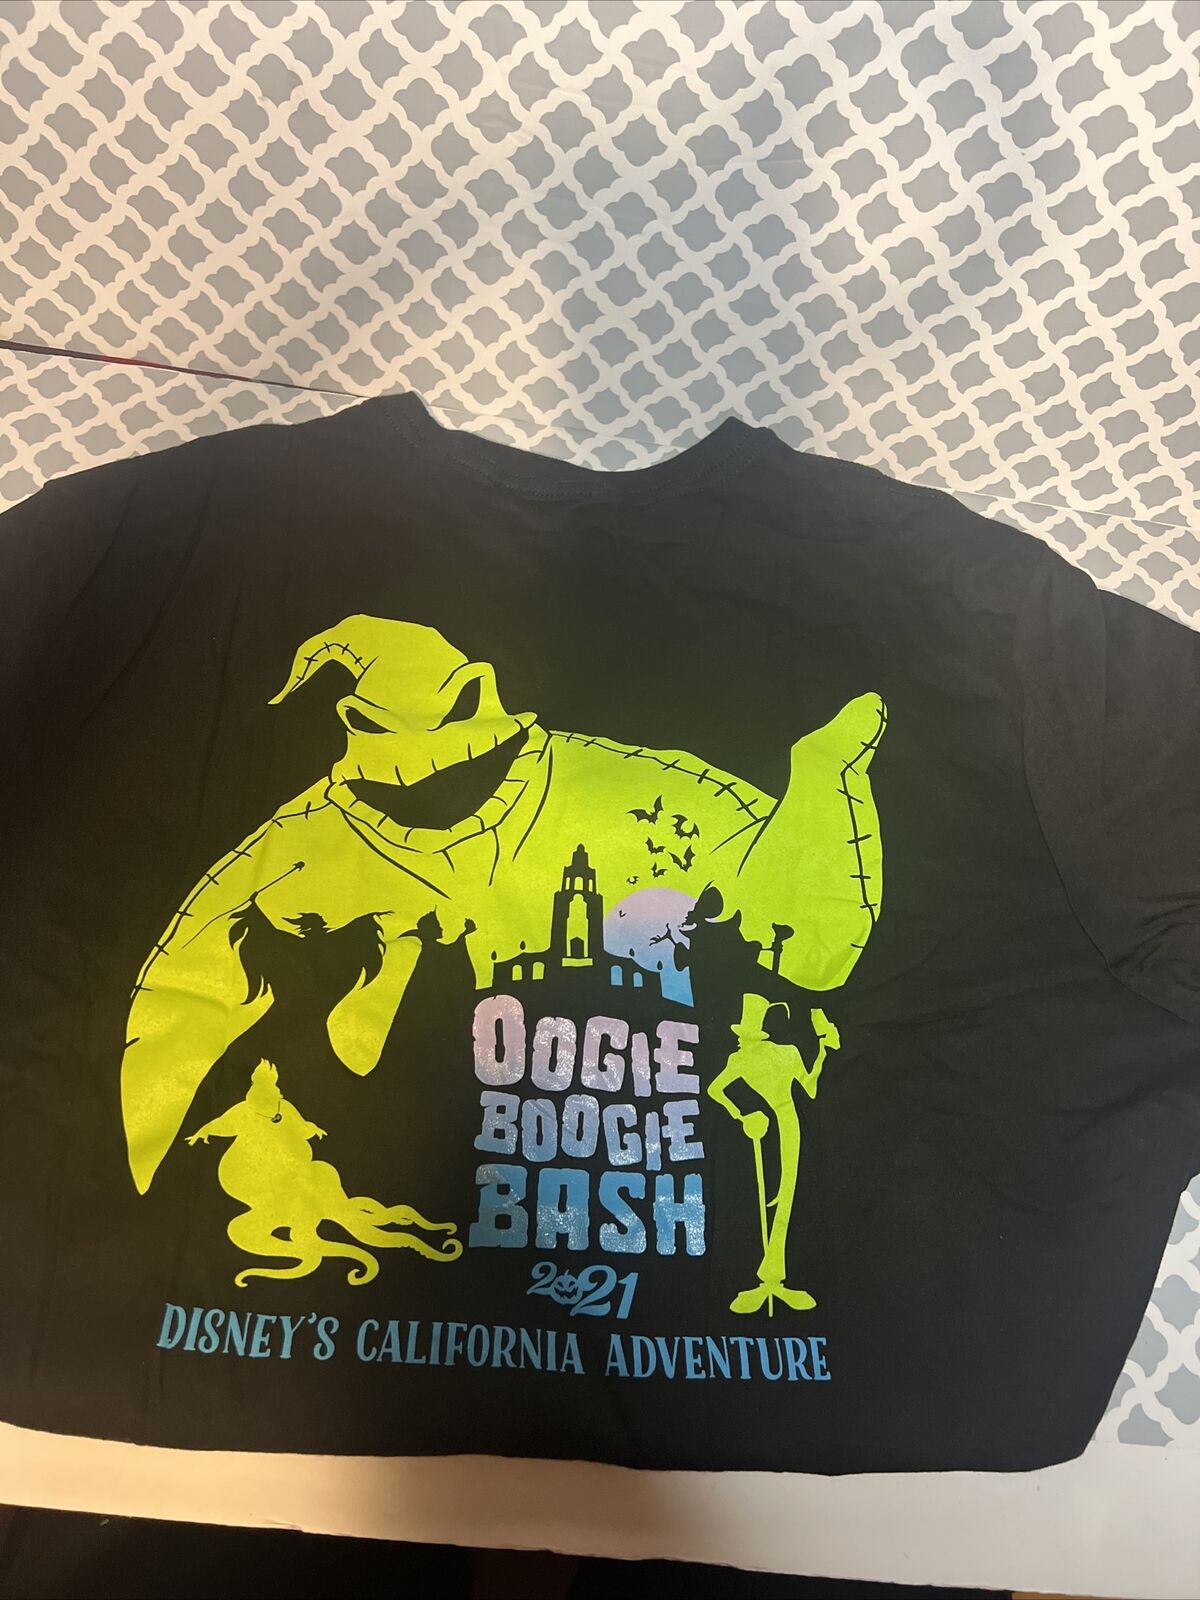 NWT Disneyland Oogie Boogie Bash 2021 Tshirt New Size 3XL Unisex